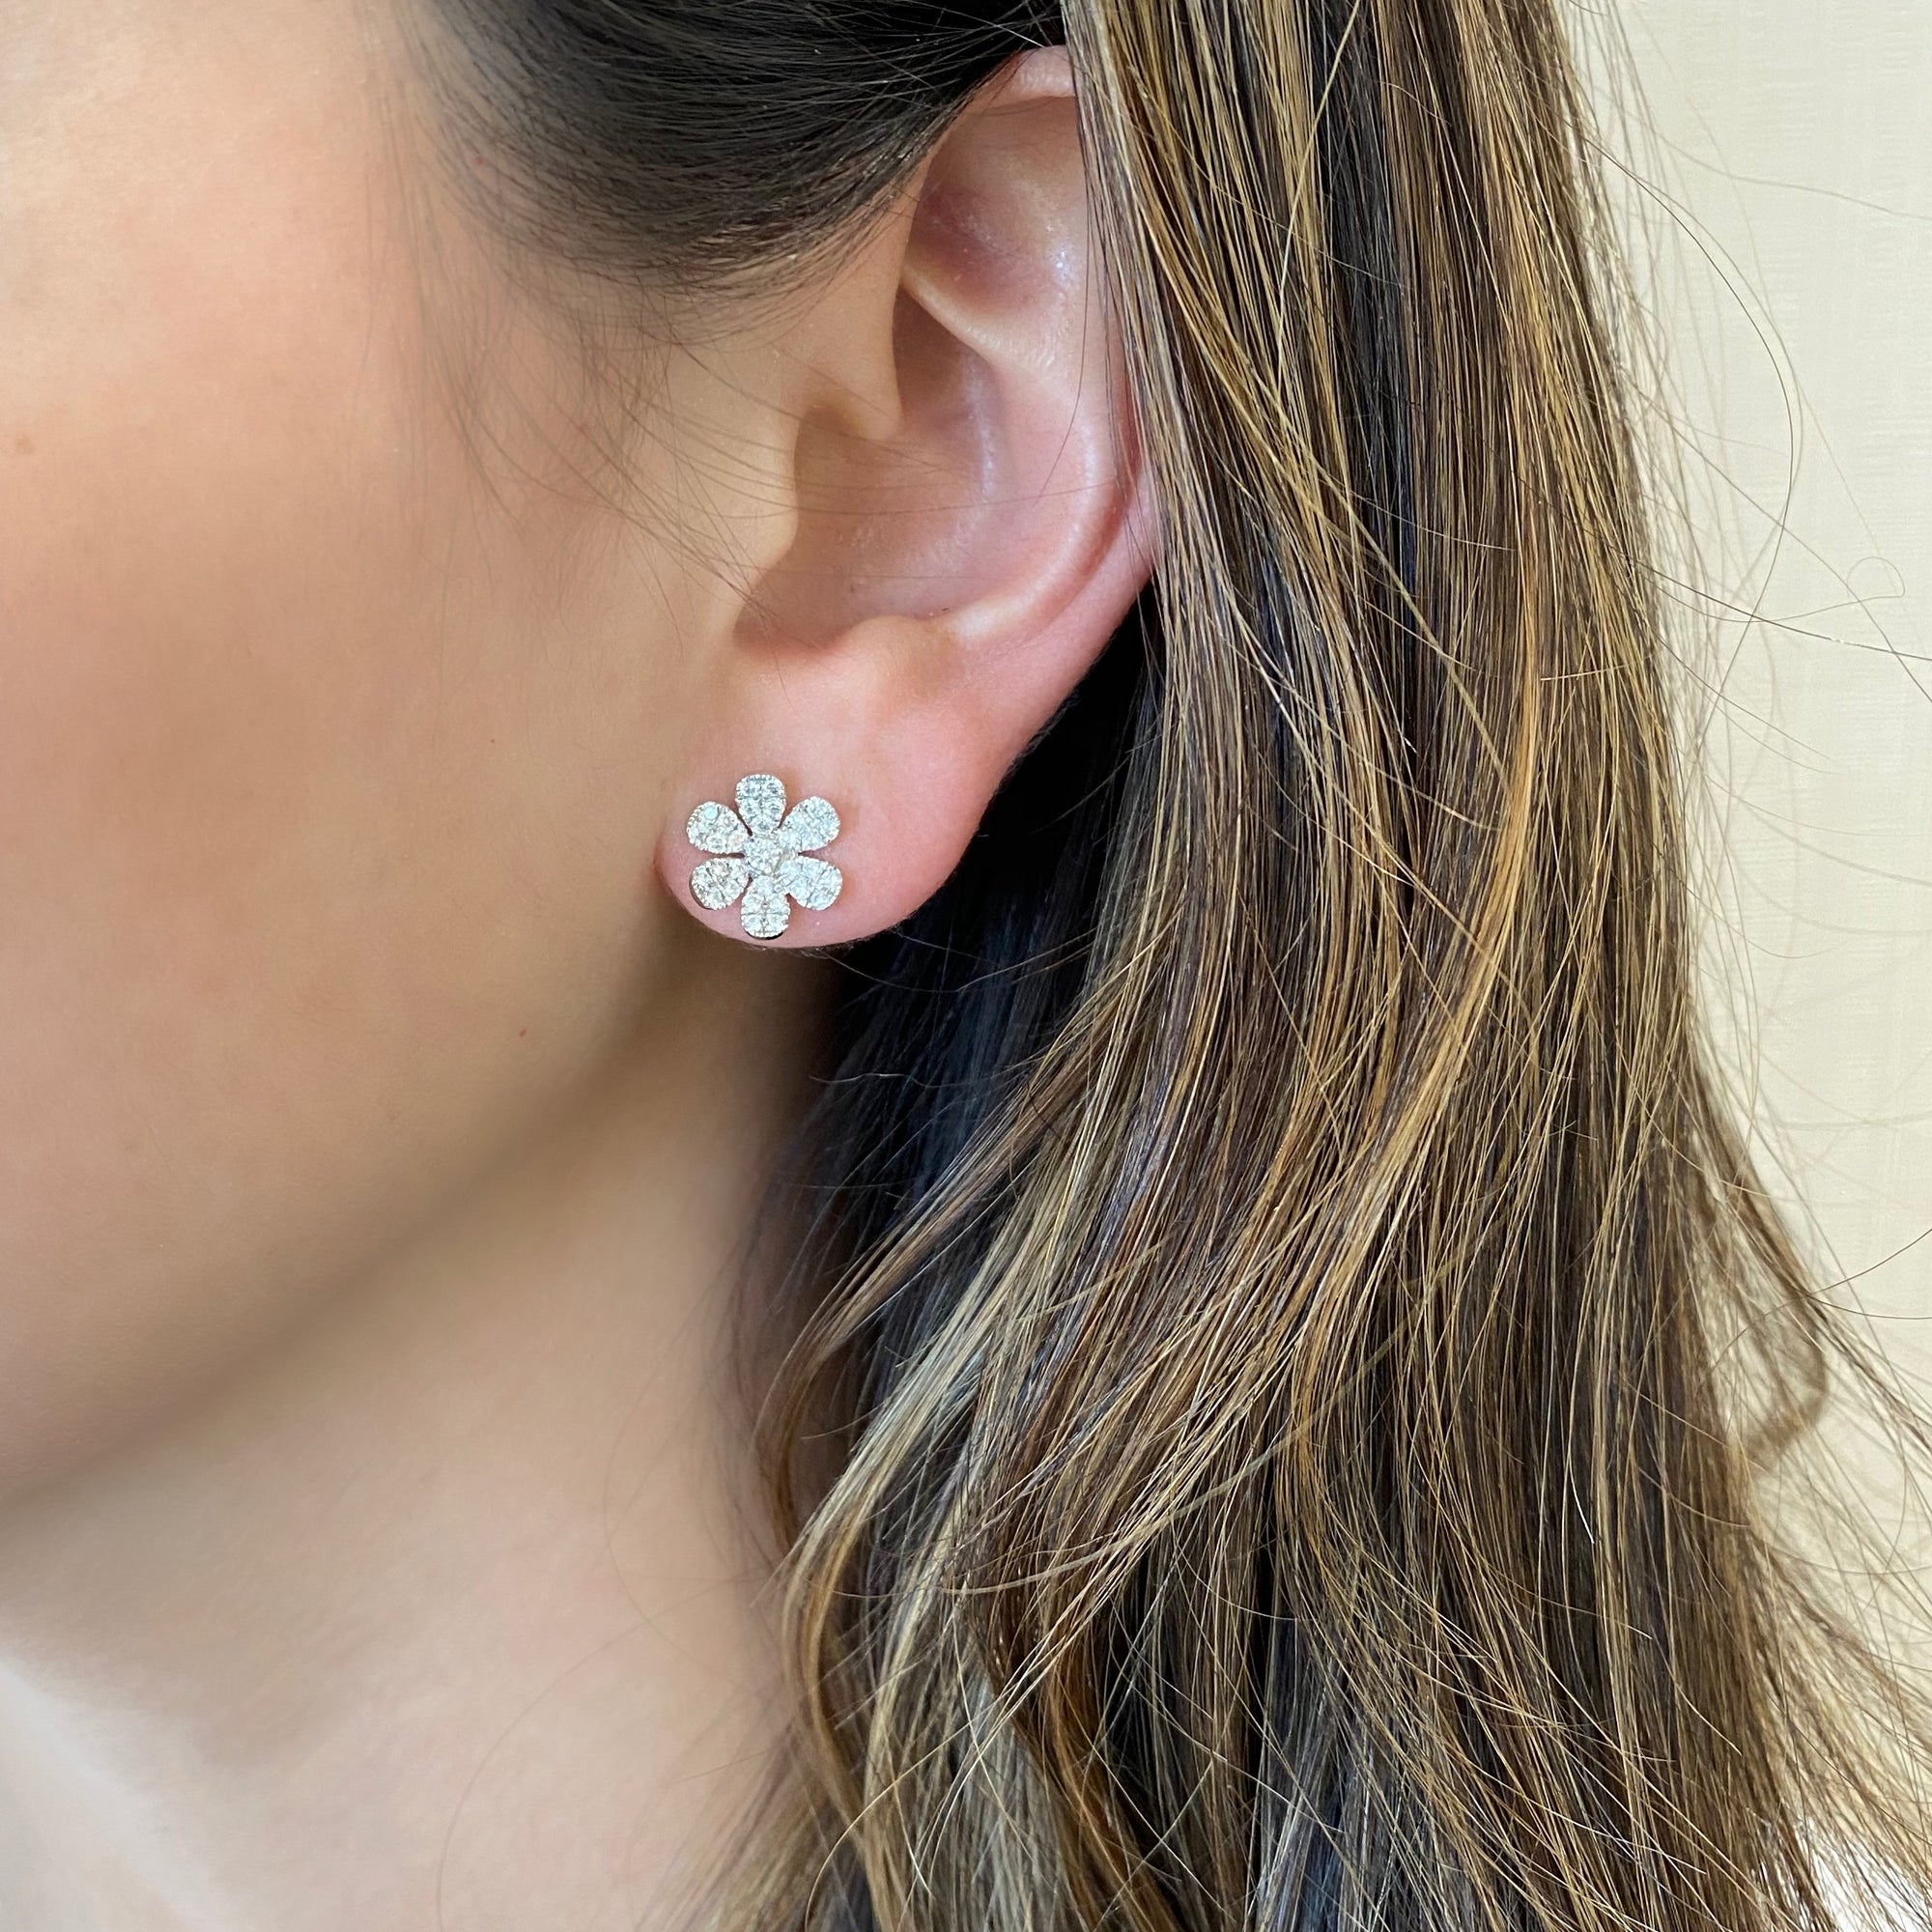 Large Diamond Flower Stud Earrings - 14K white gold weighing 2.53 grams - 62 round diamonds totaling 0.74 carats